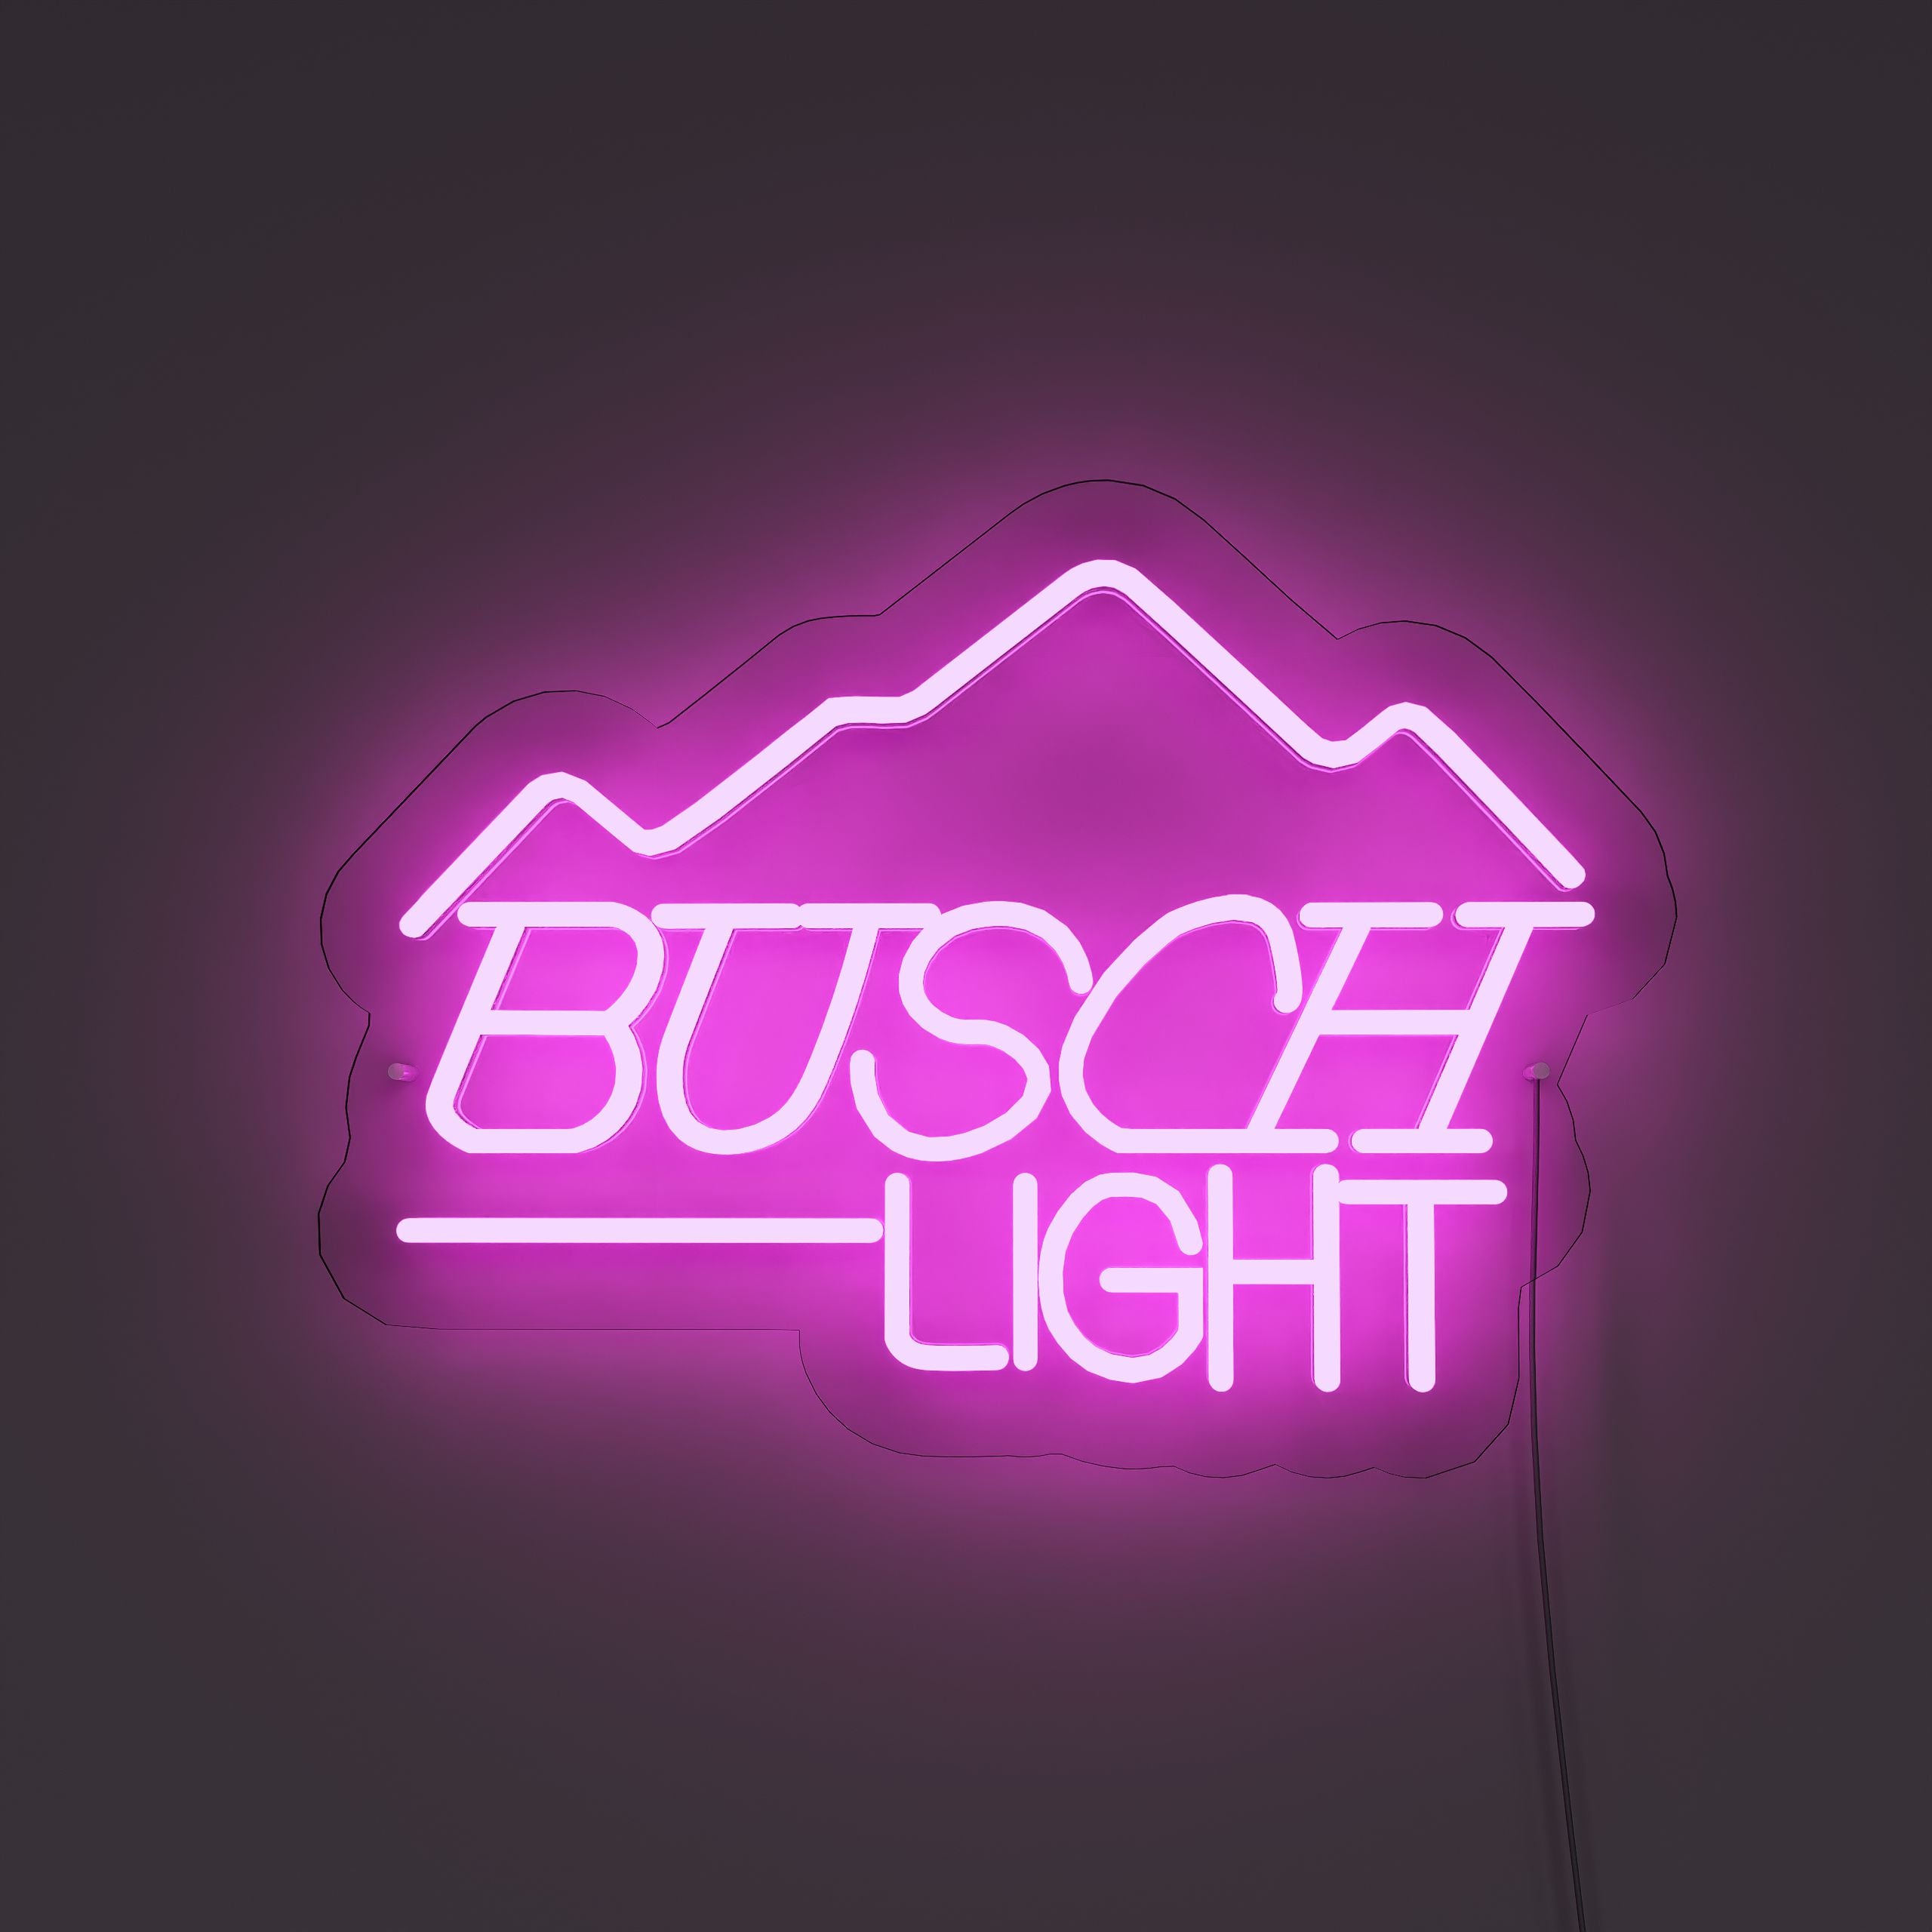 fbusch-light-neon-signs-Fuchsia-Neon-sign-Lite